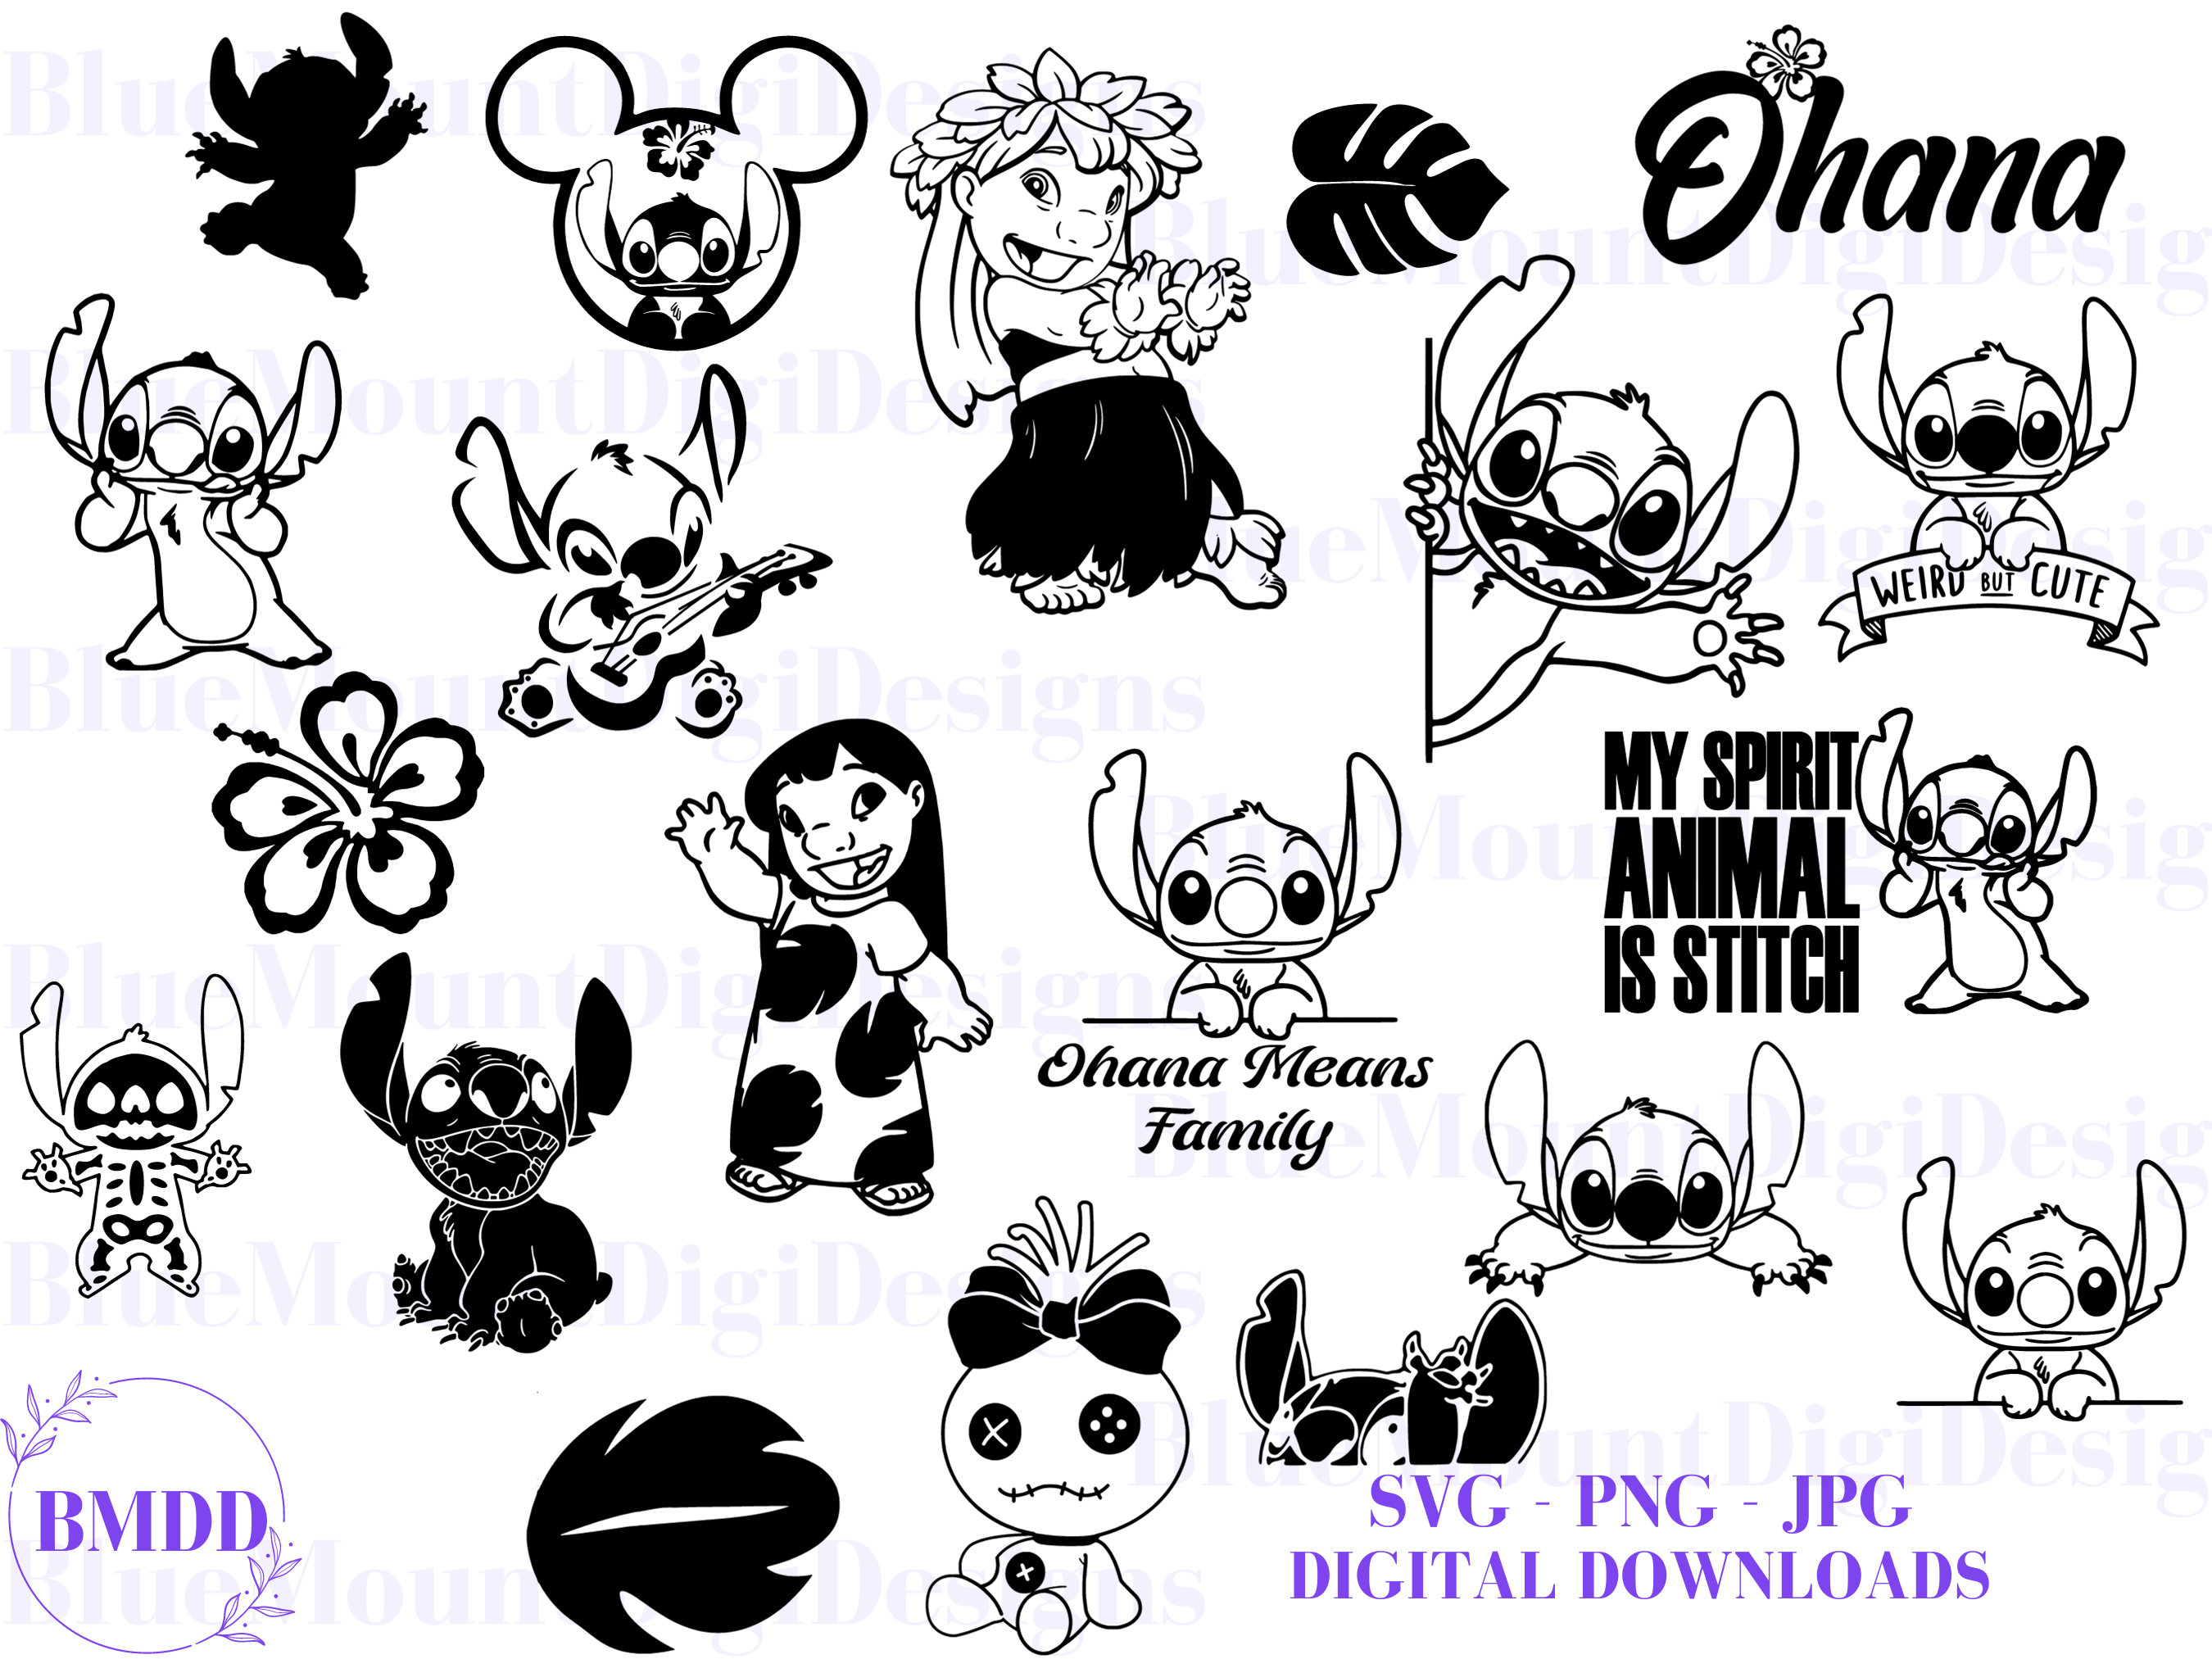 Disney Stitch SVG Bundle – MasterBundles